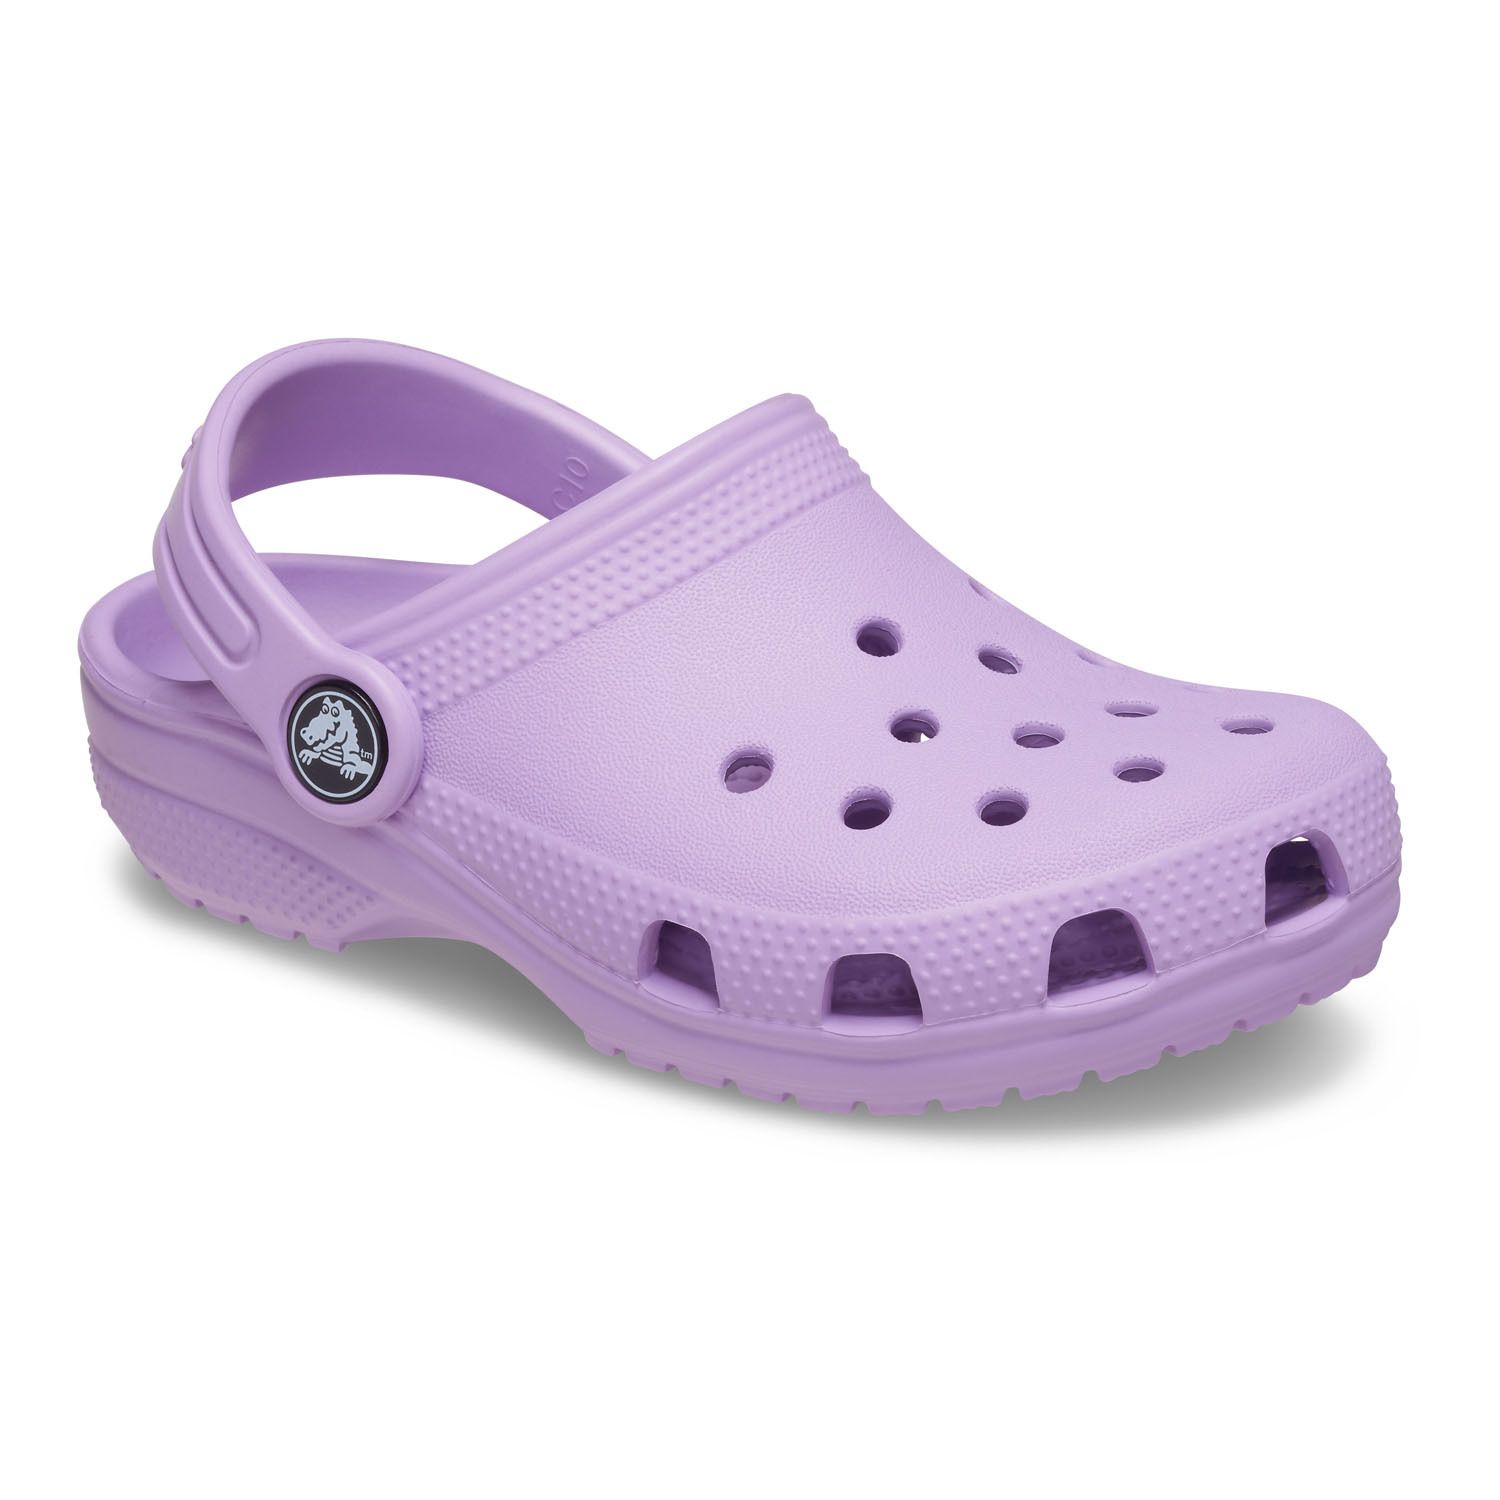 purple crocs size 5